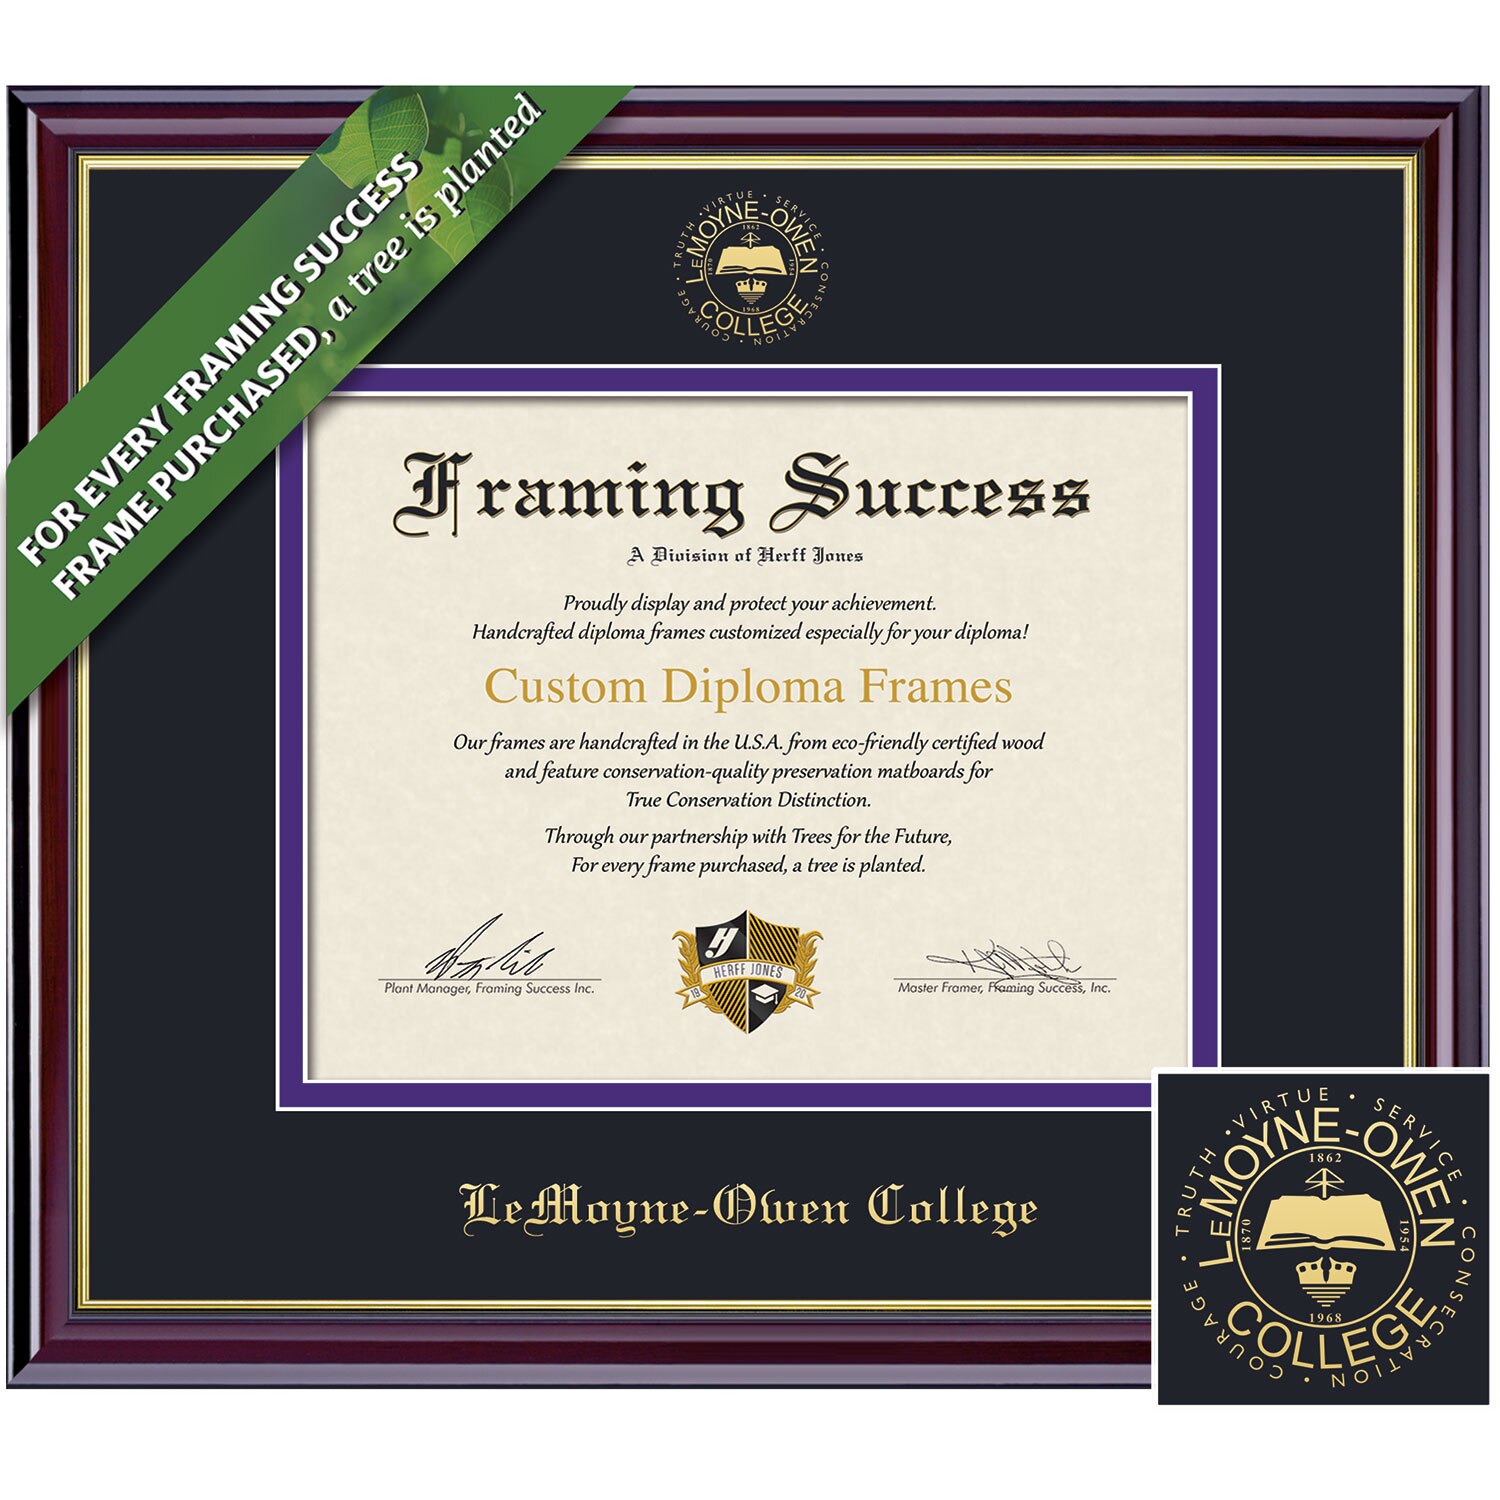 Framing Success 8.5 x 11 Windsor Gold Embossed School Seal Associates, Bachelors Diploma Frame